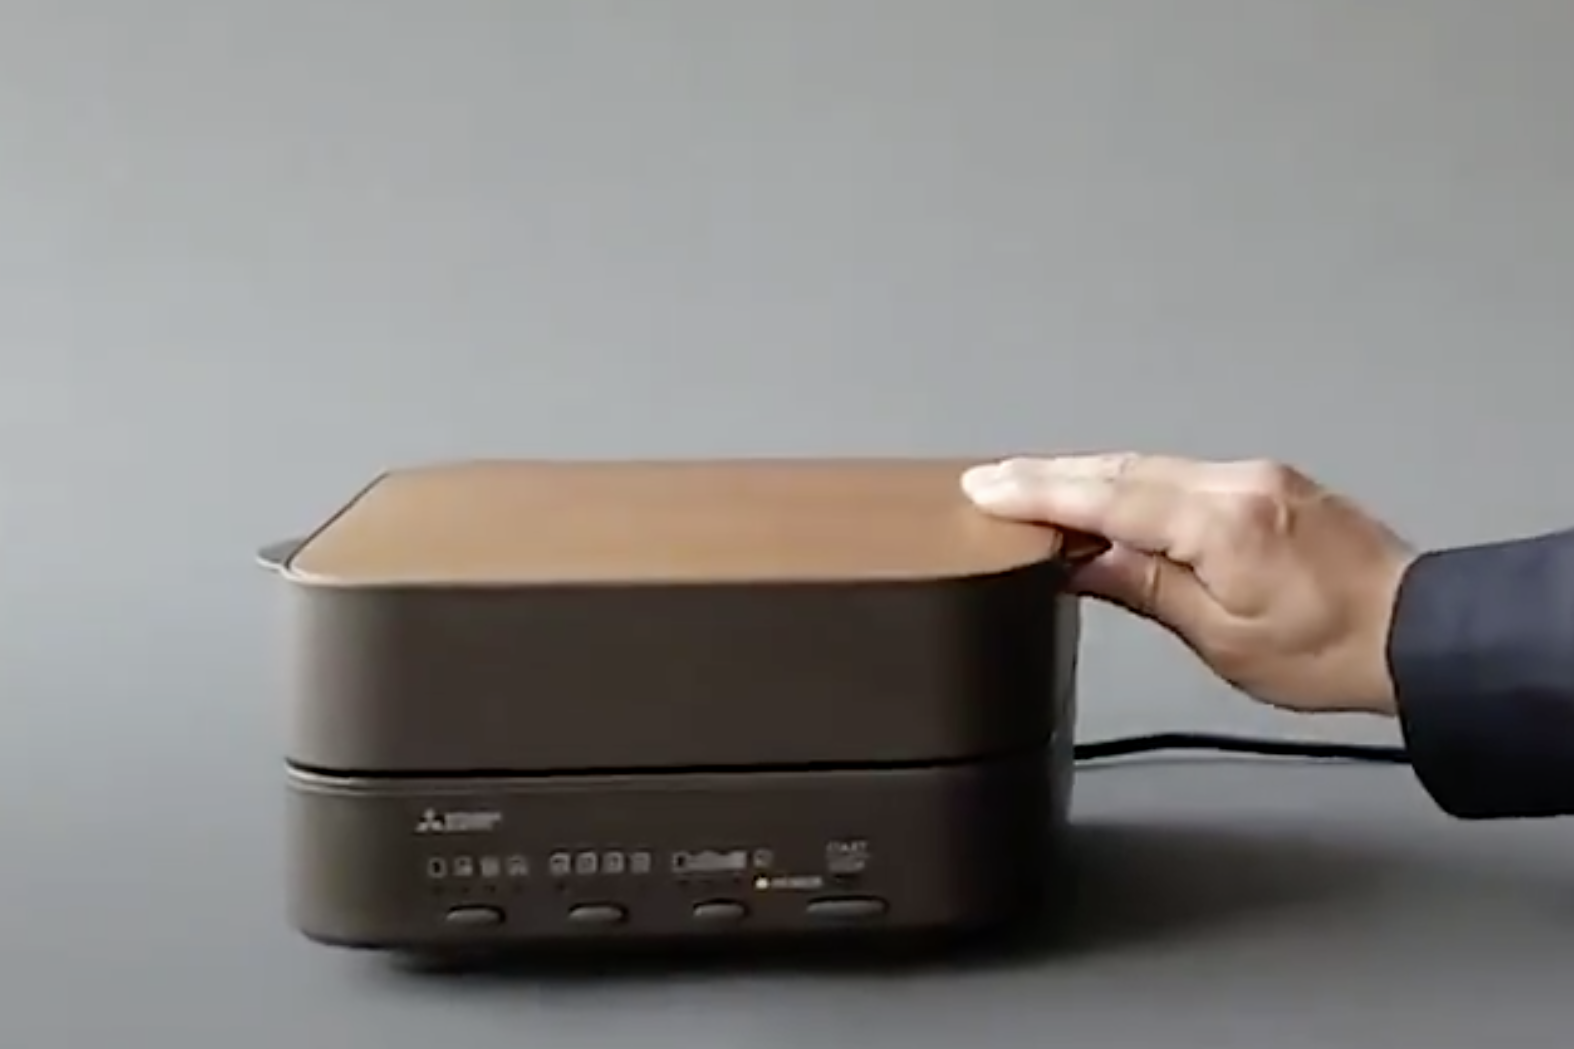 https://static.independent.co.uk/s3fs-public/thumbnails/image/2019/05/17/15/mitsubishi-toaster-02.png